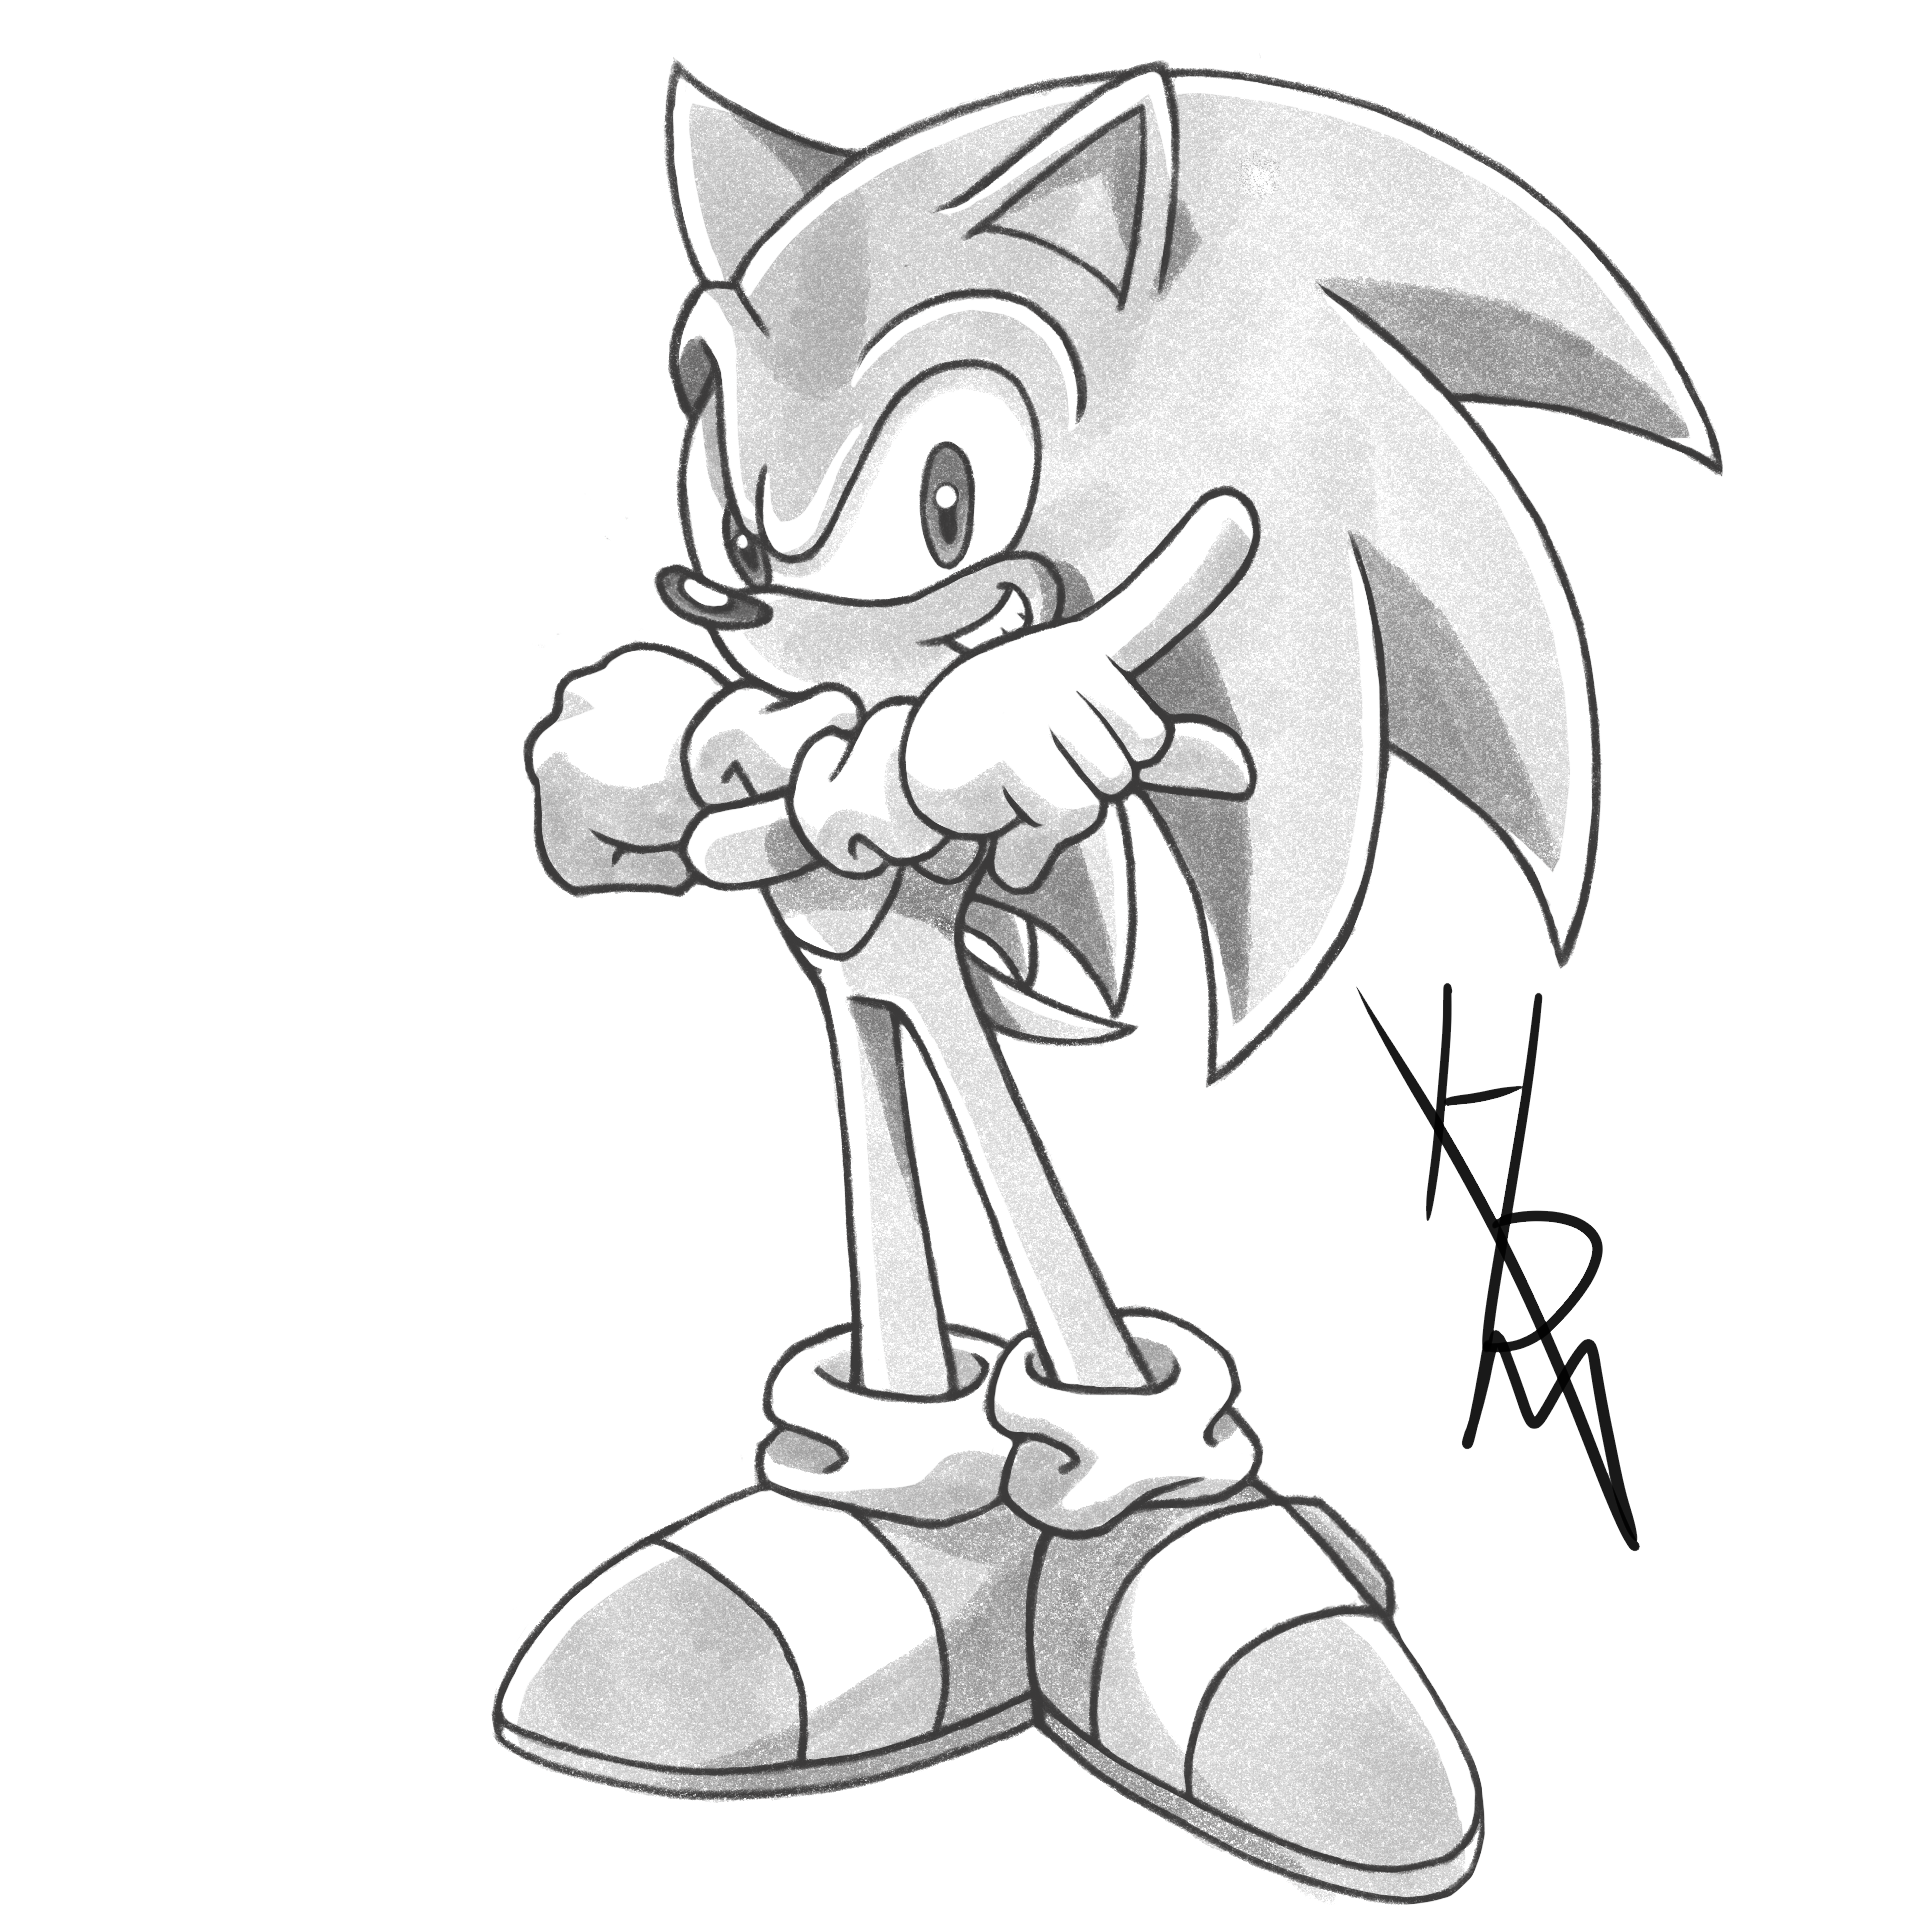 Sonic X cartoon style pencil drawing by HiddenMatrixYT on DeviantArt